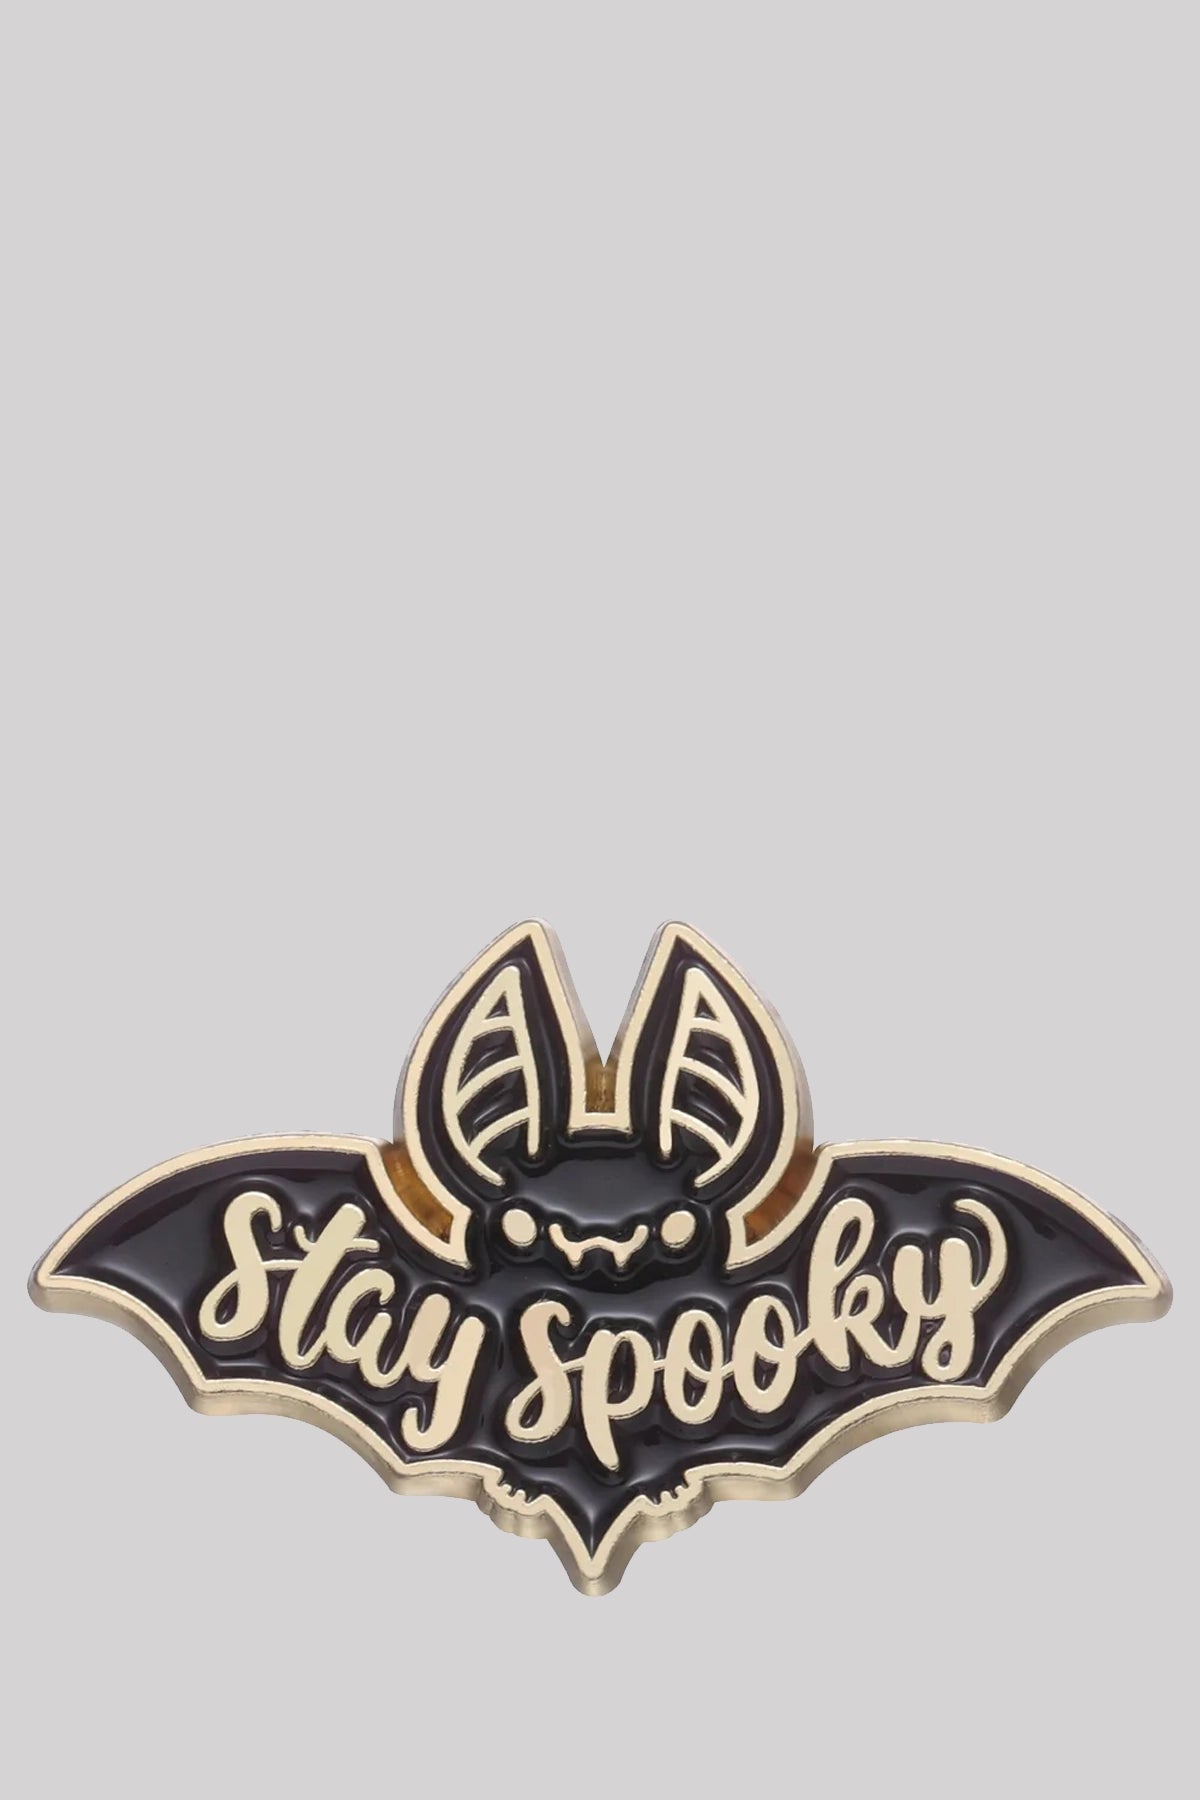 Ro Rox Stay Spooky Bat Gothic Pin Badge Brooch